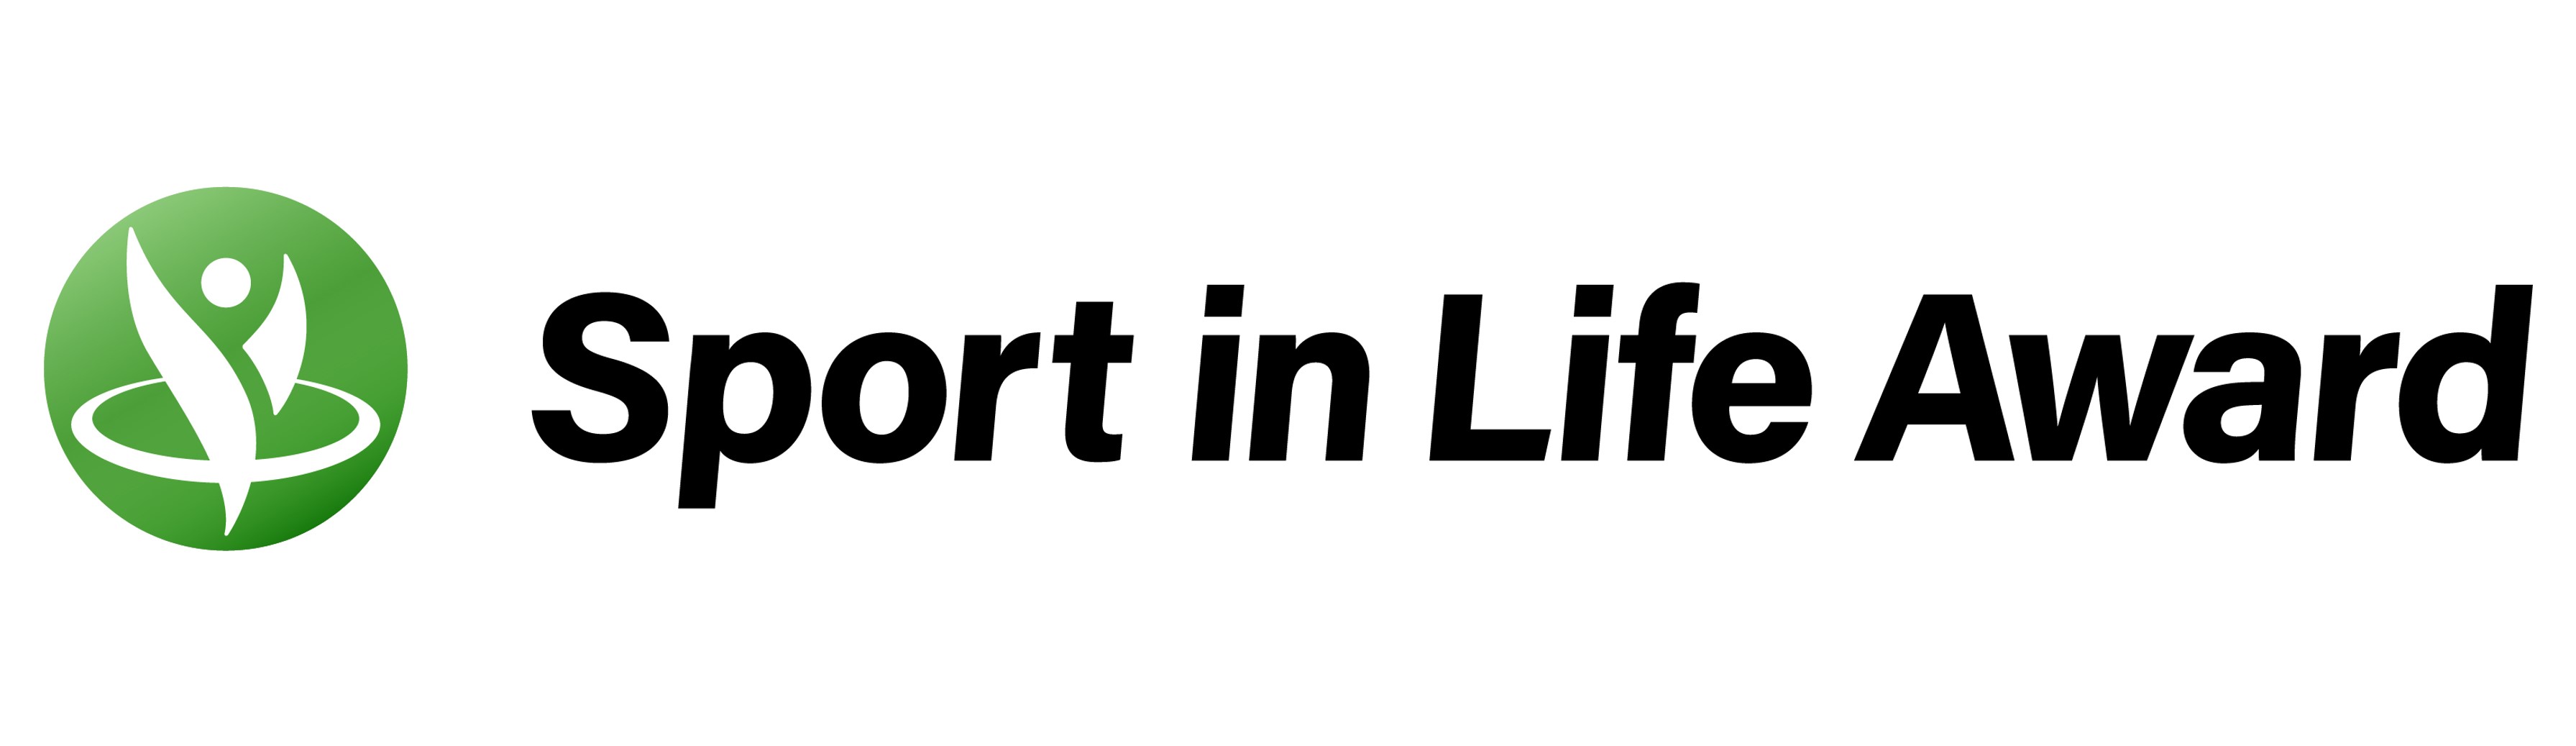 sportinlifeaward_logo_01.jpg